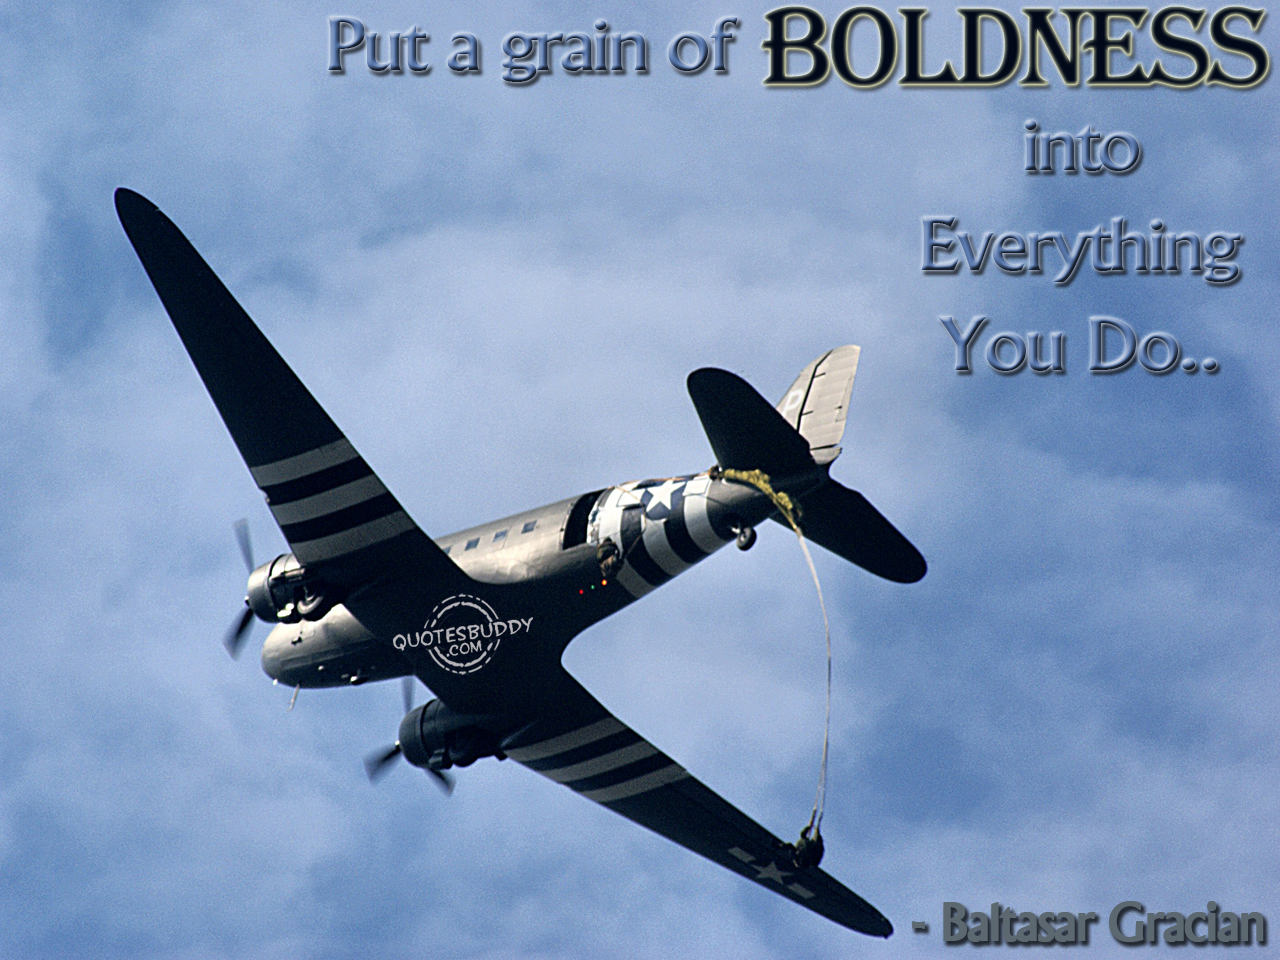 Put a grain of boldness into everything you do. Baltasar Gracian